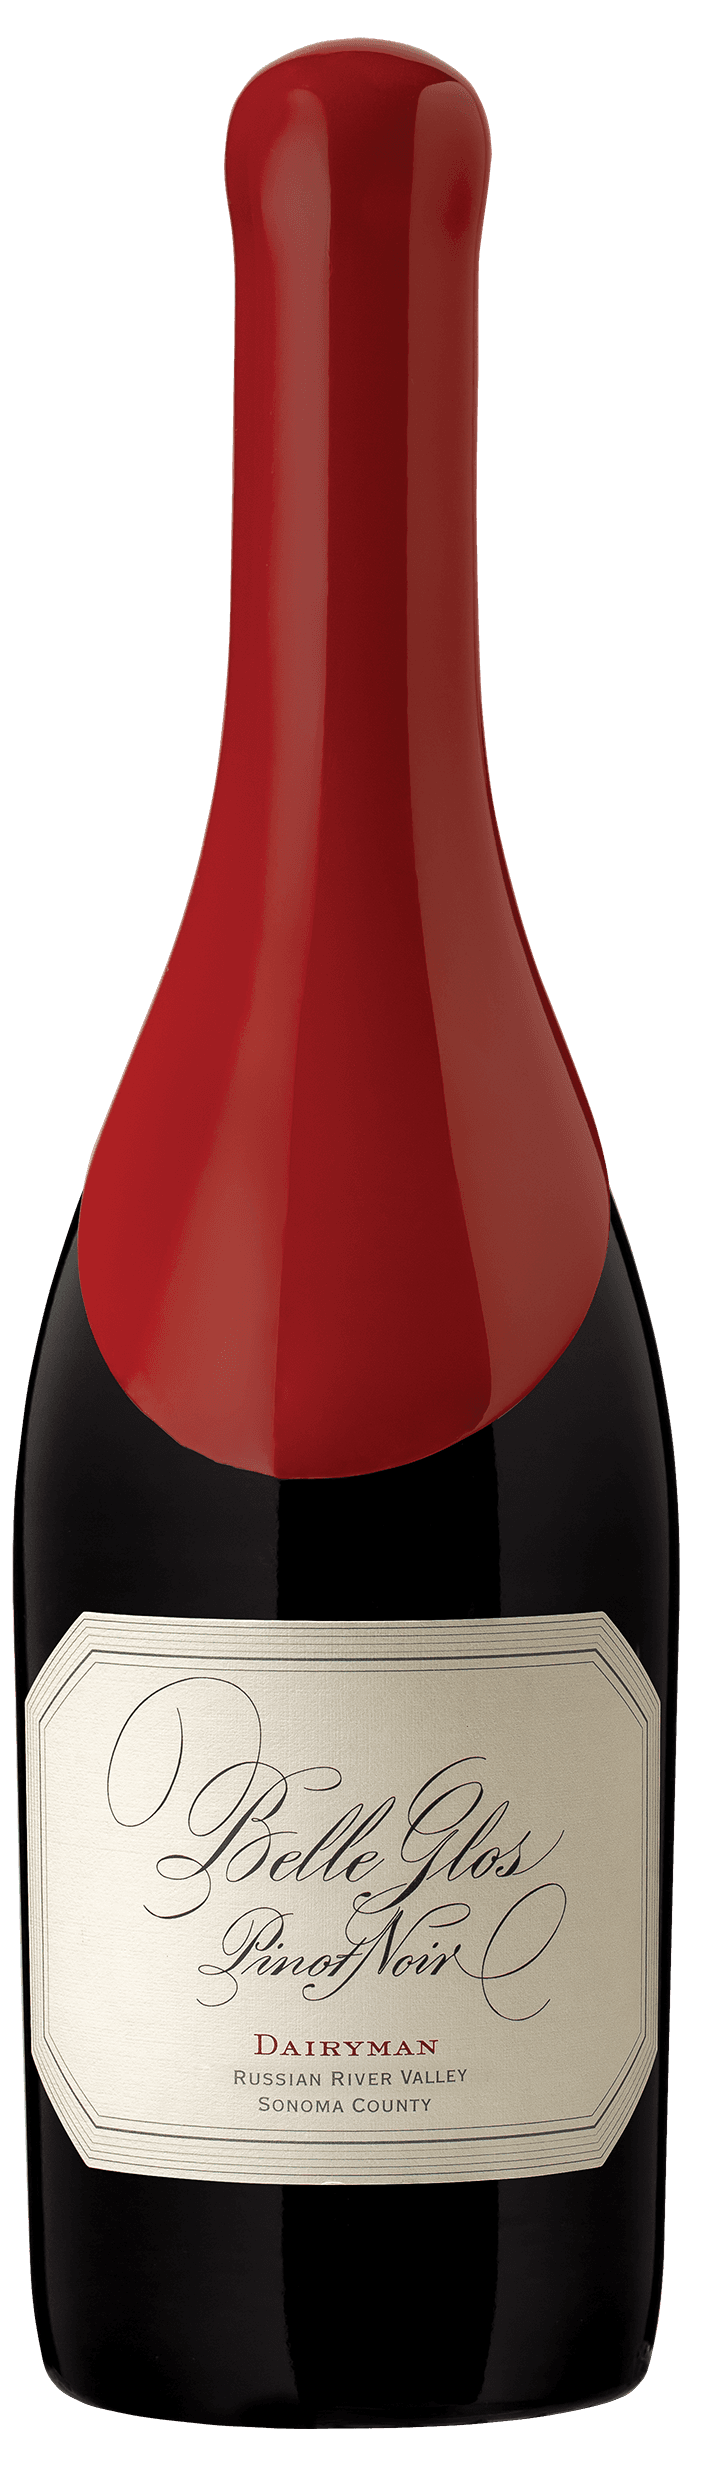 Belle Glos 'Dairyman Vineyard' Pinot Noir Russian River Valley